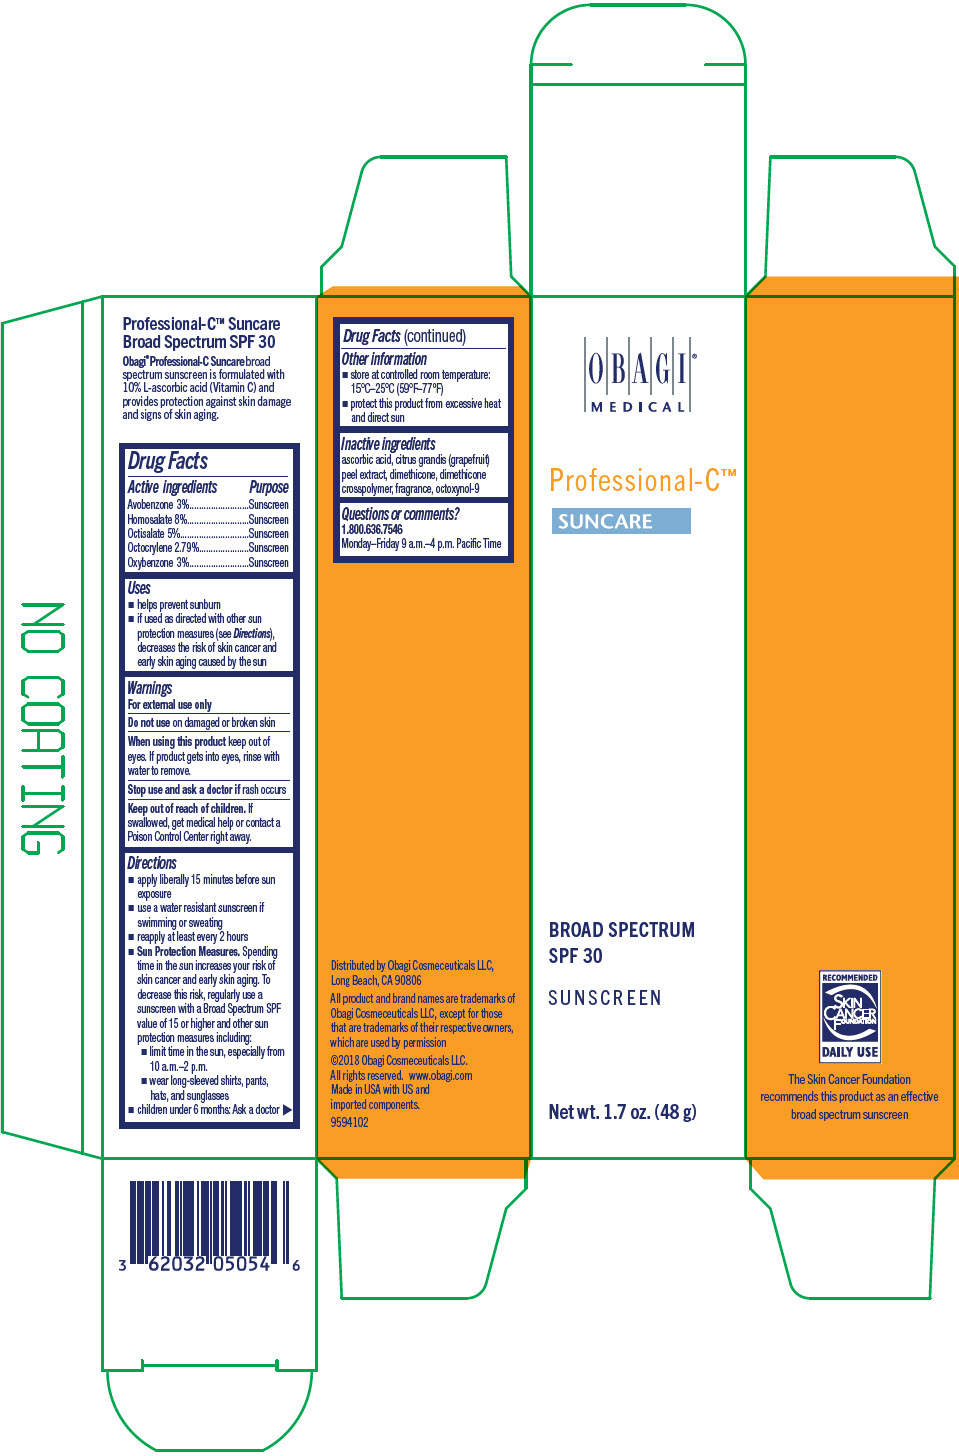 PRINCIPAL DISPLAY PANEL - 48 g Bottle Carton